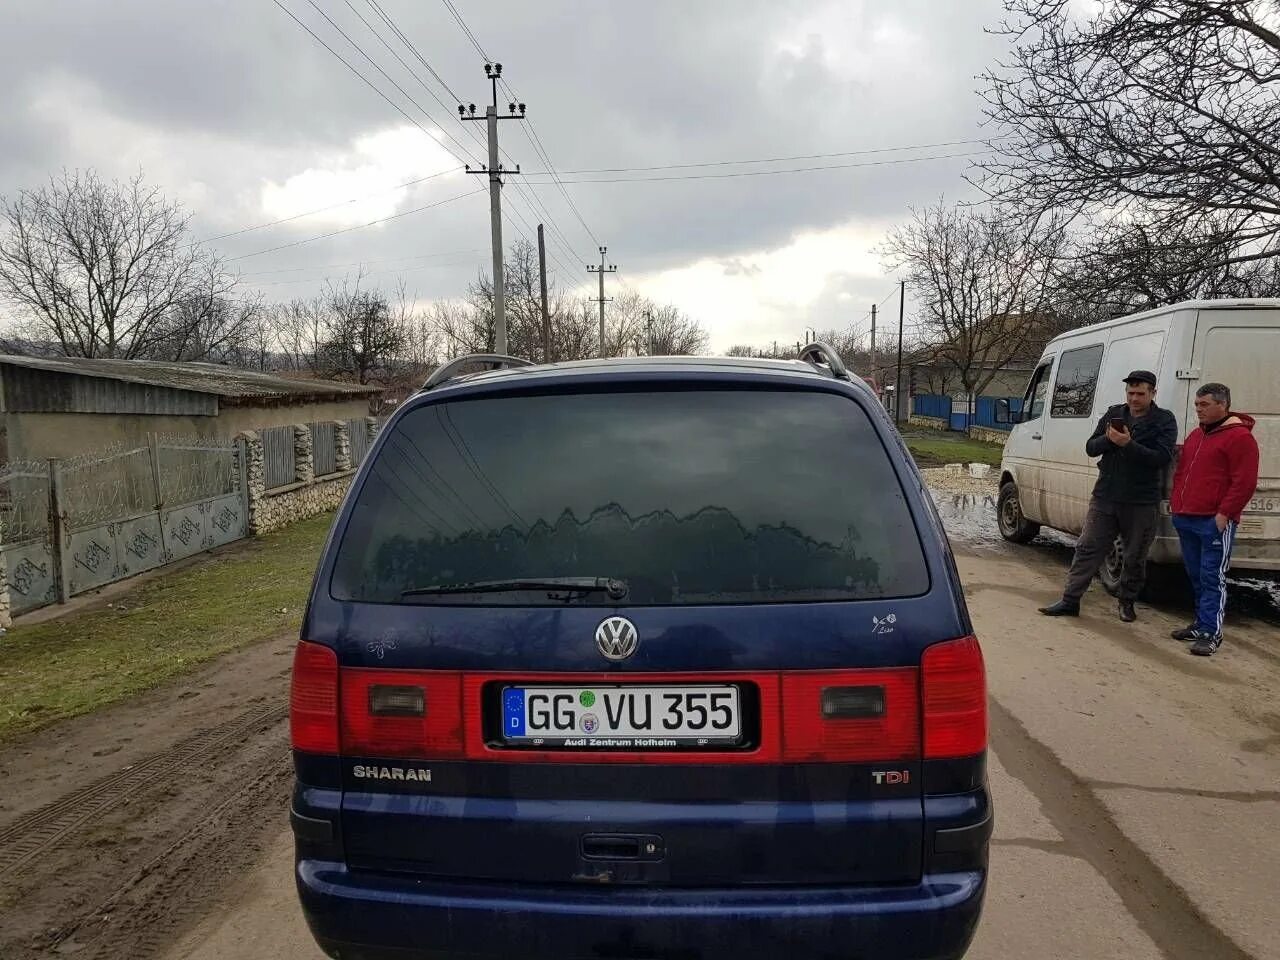 Volkswagen sharan года выпуска. Шаран 1996. Фольксваген Шаран 2008. Фольксваген Шаран 1996. Фольксваген Шаран 2008 года.